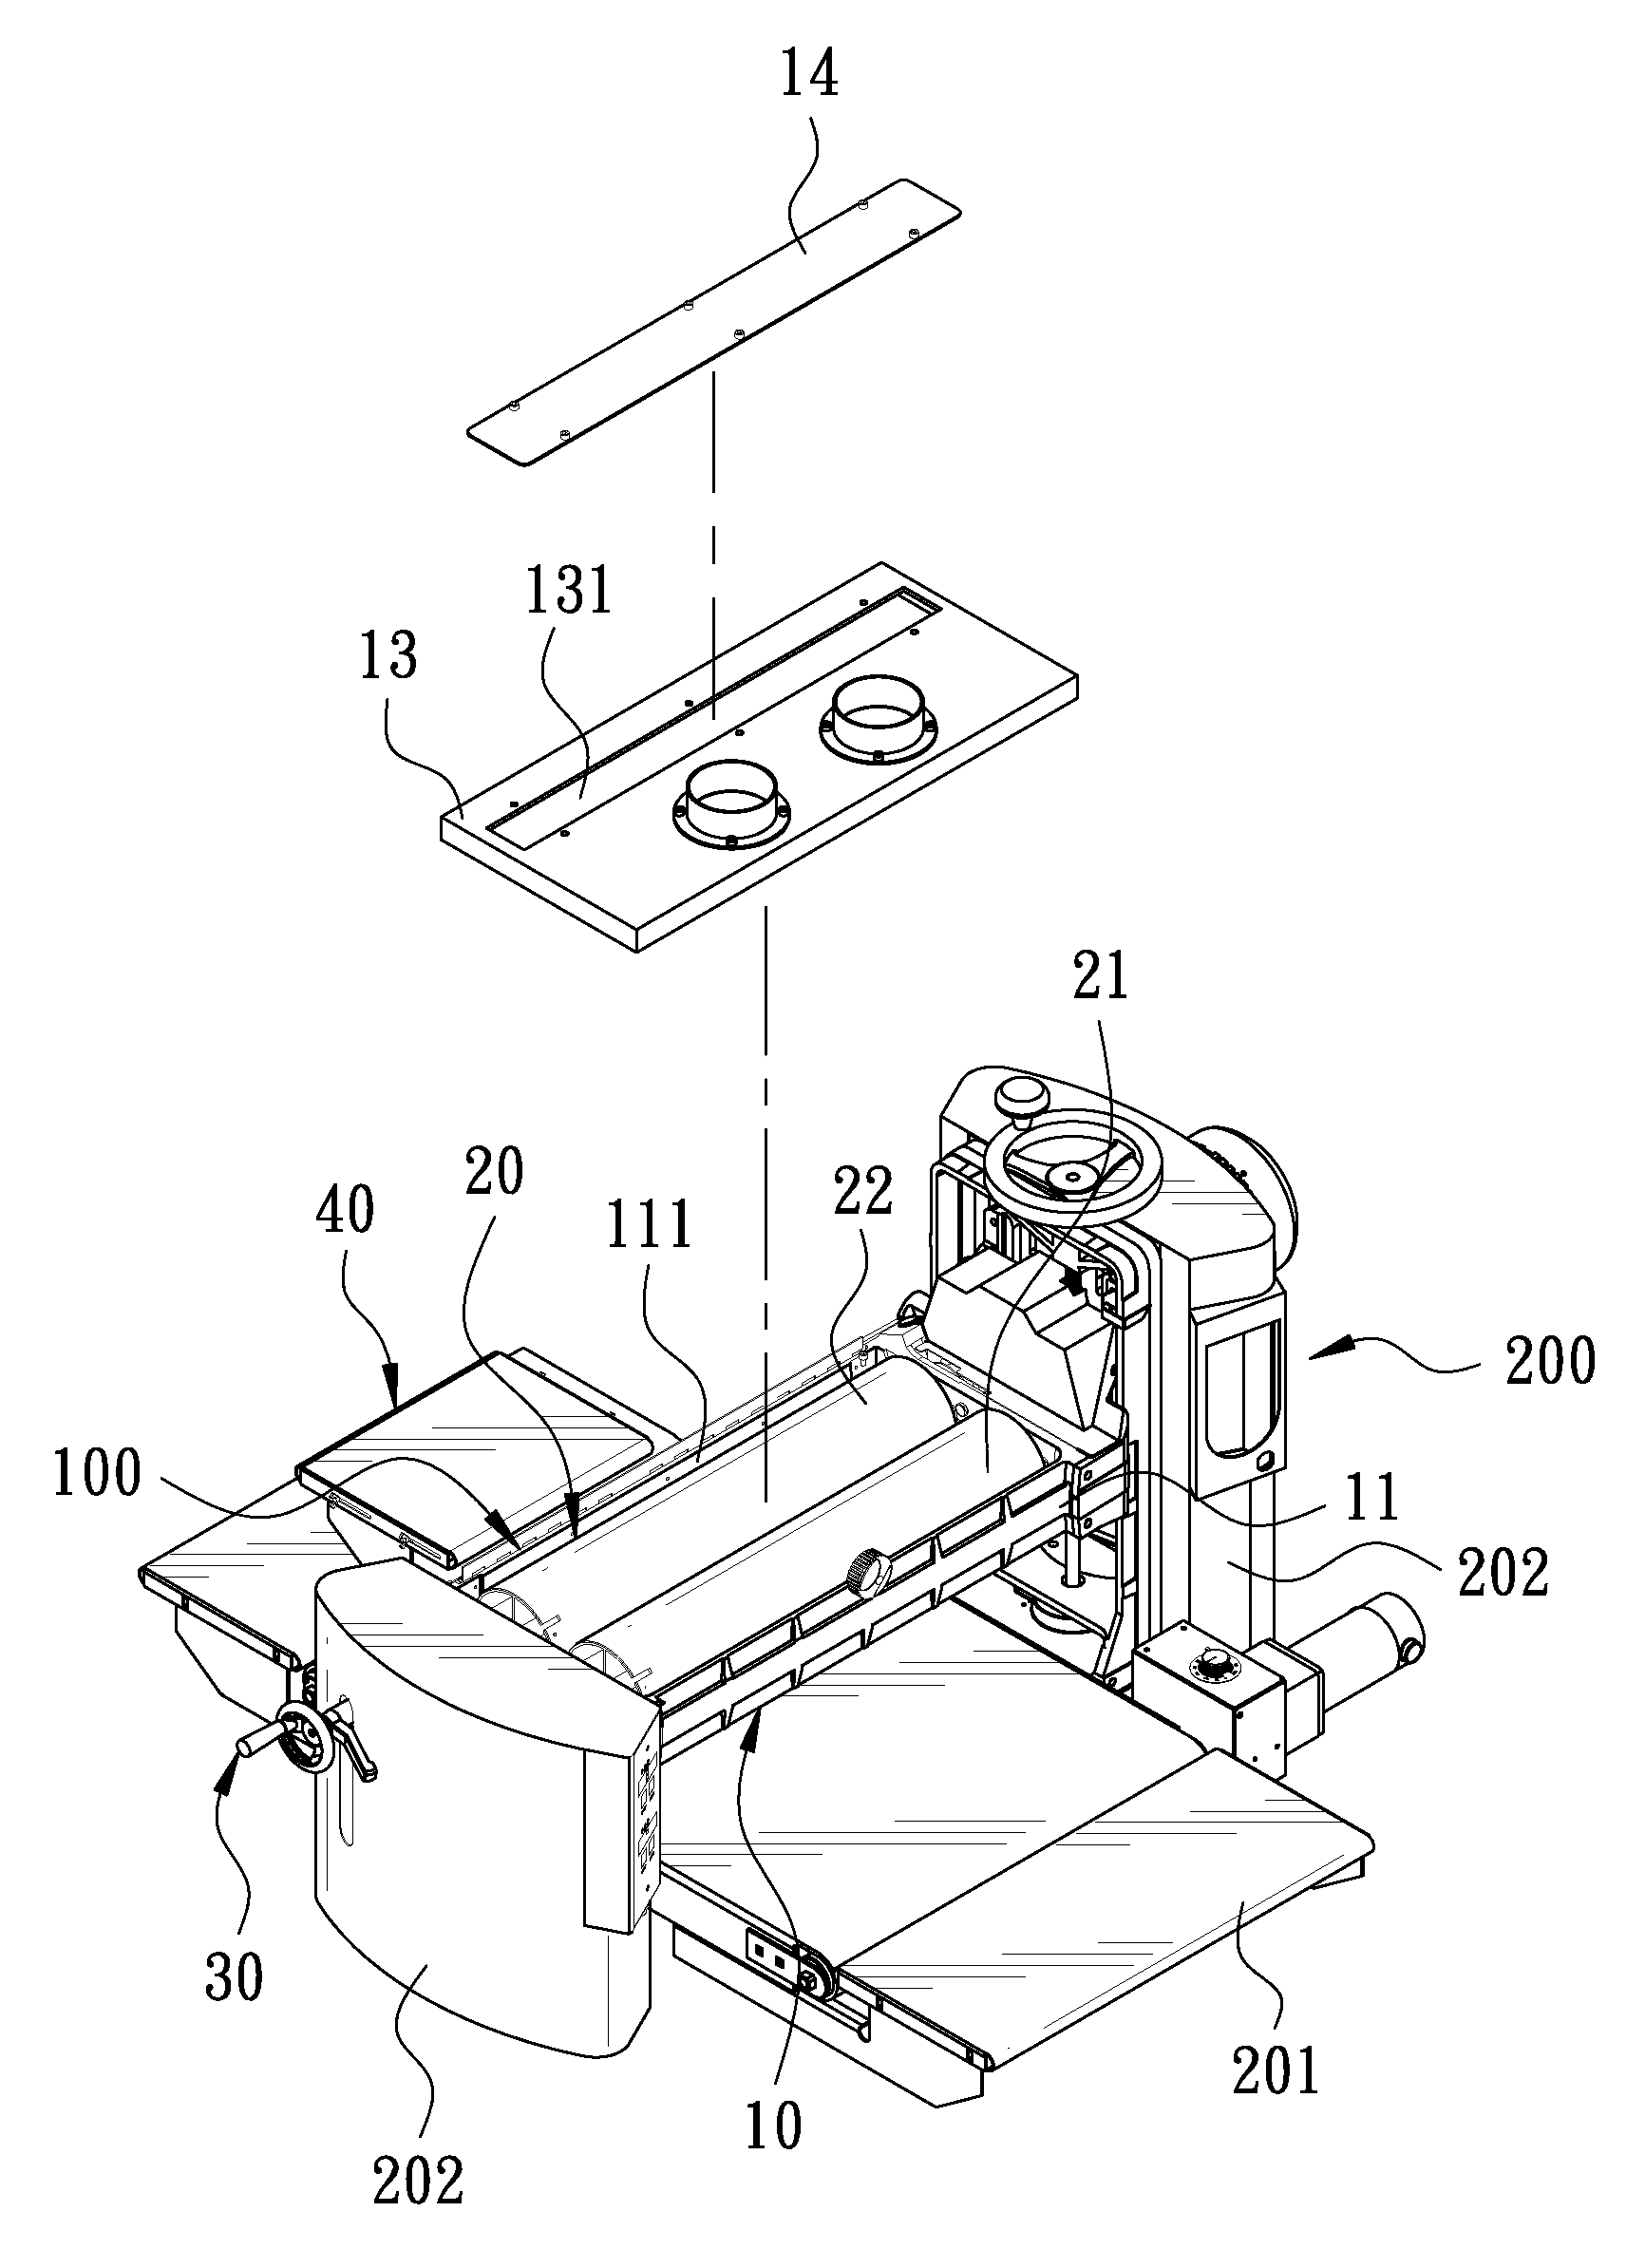 Abrasive apparatus of a sander